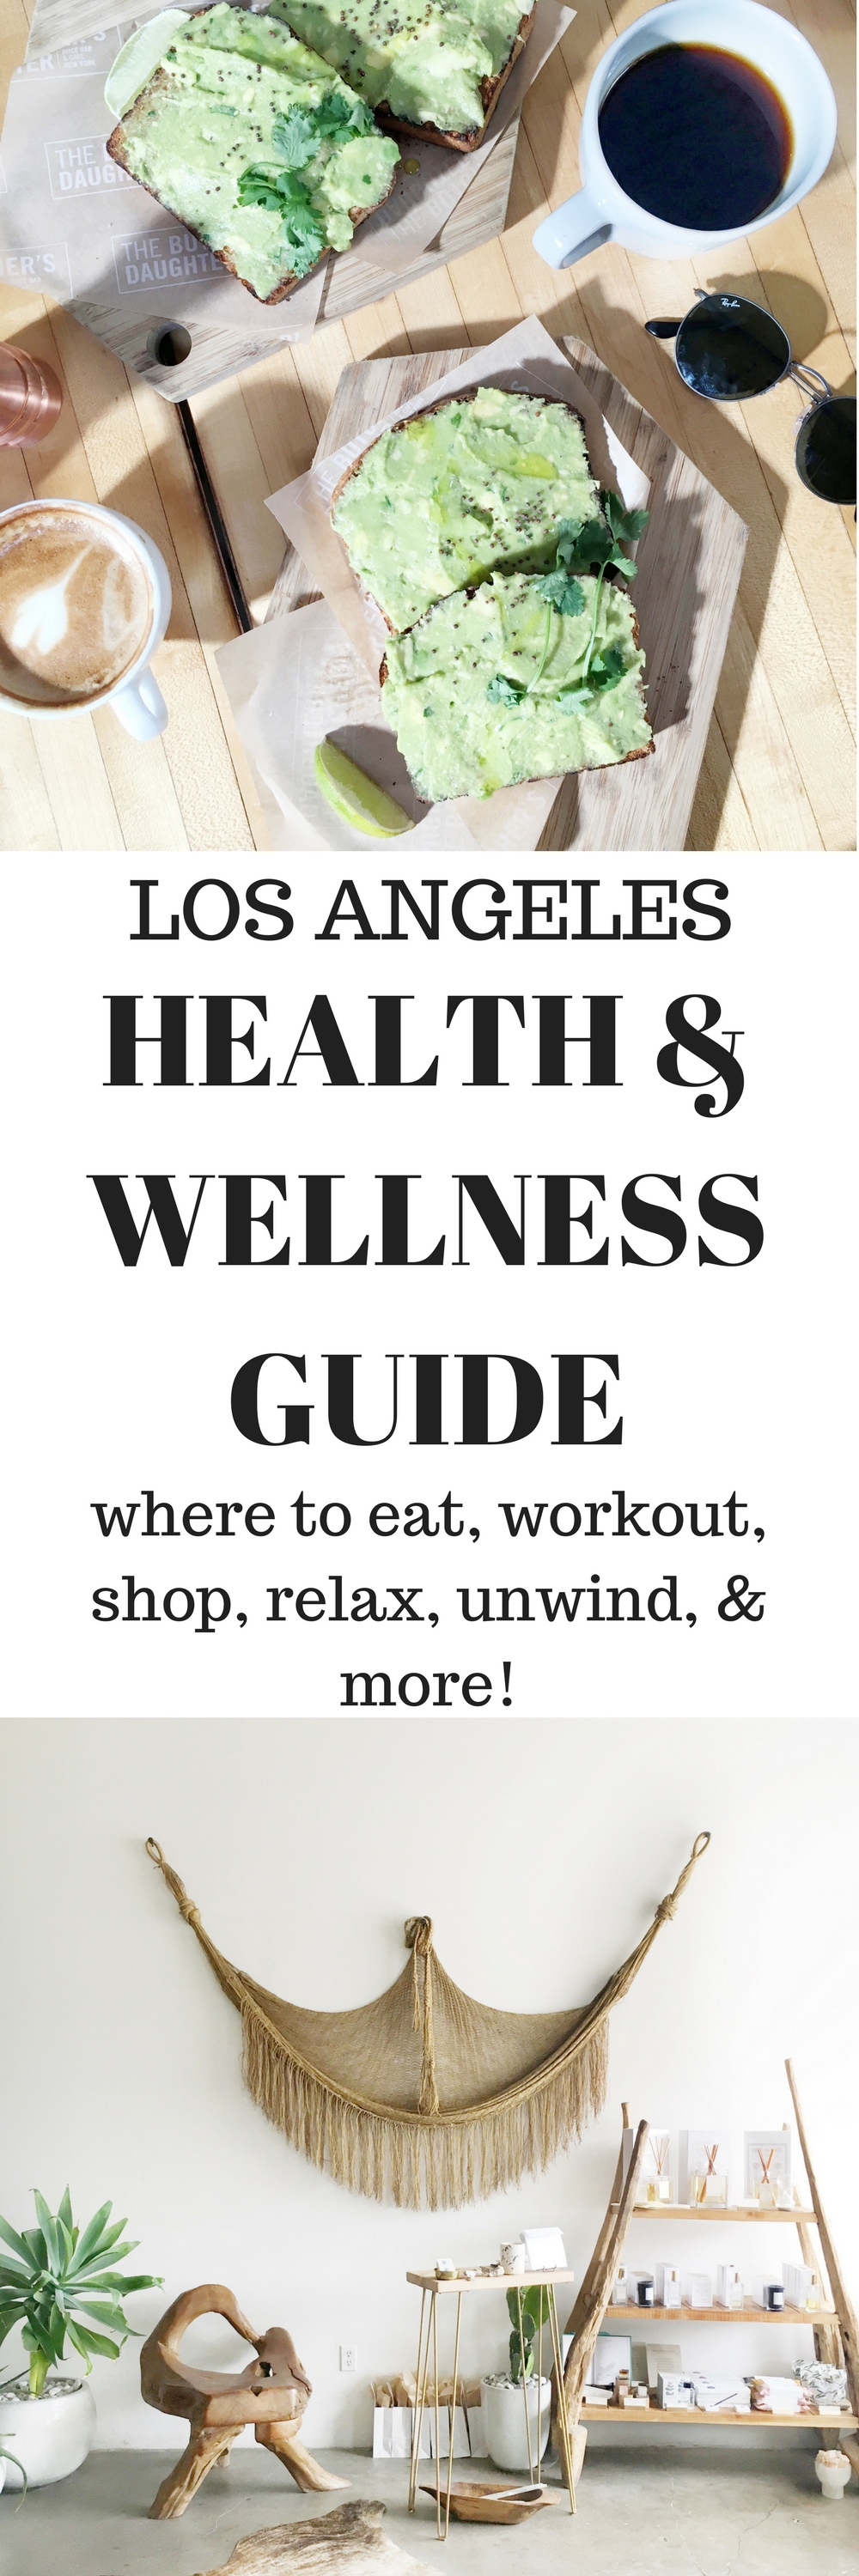 Los Angeles Health & Wellness Guide